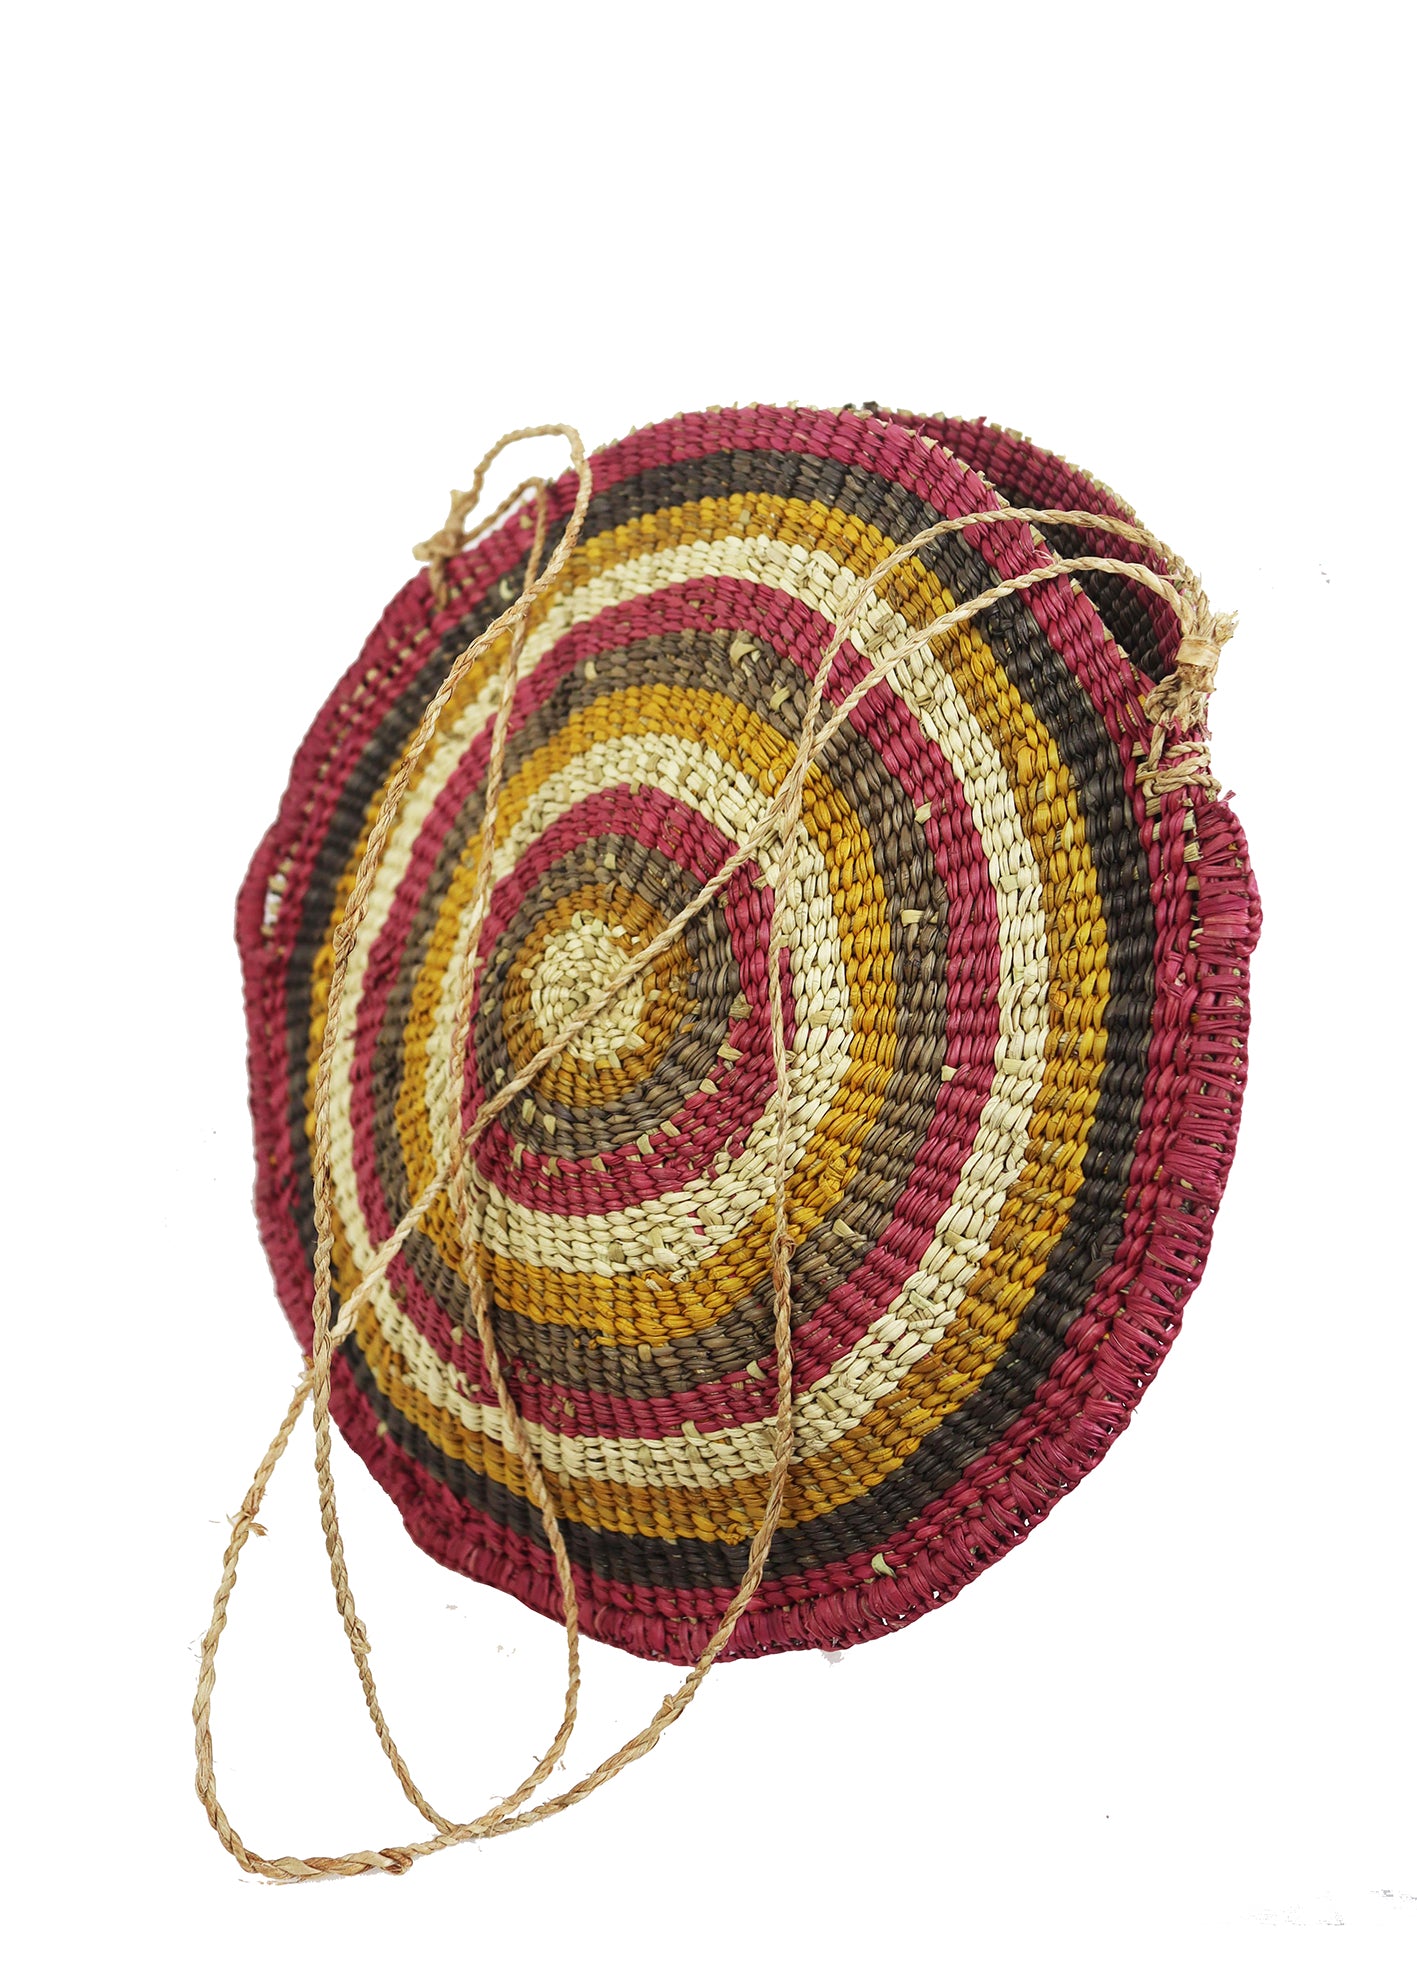 Pandanus Weaving (Handbag)